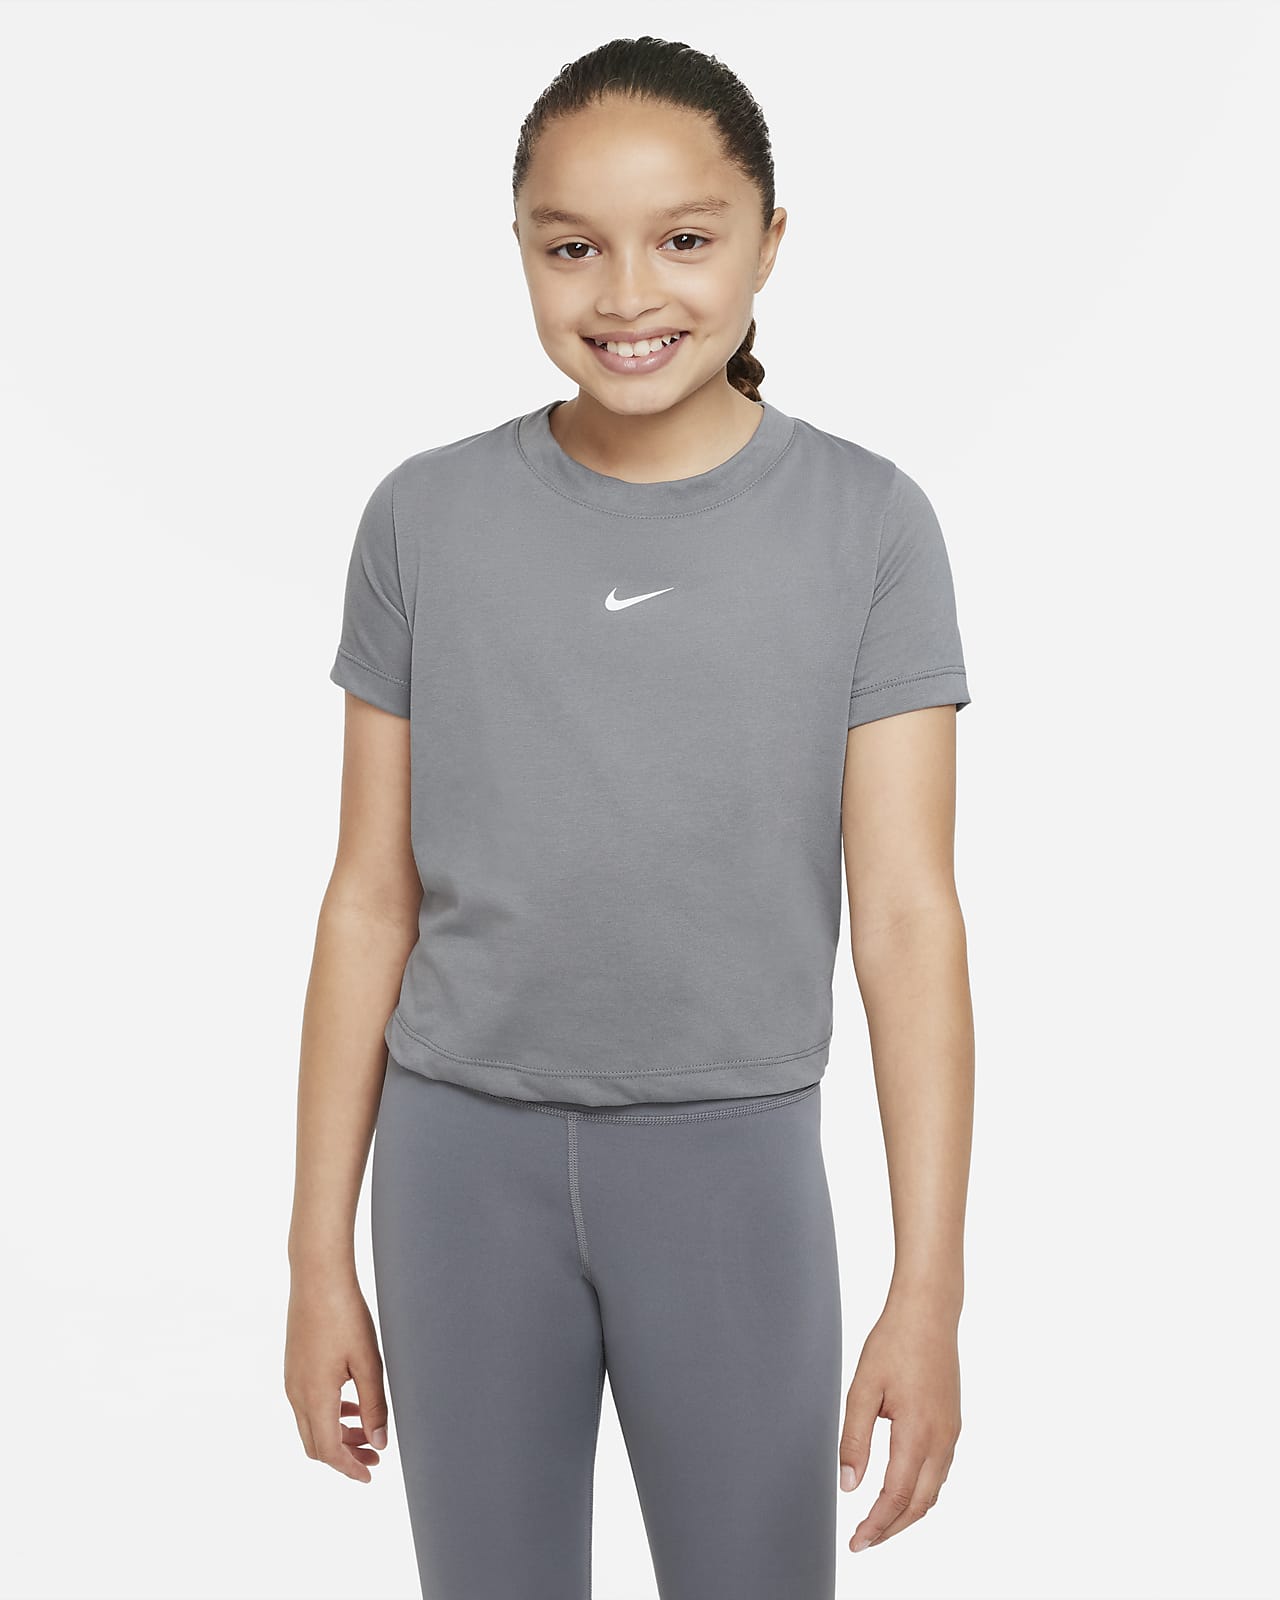 Nike, Shirts & Tops, Nike Drifit Big Girl Teen Size Xl Tween Shirt  Athletic Top Ruched